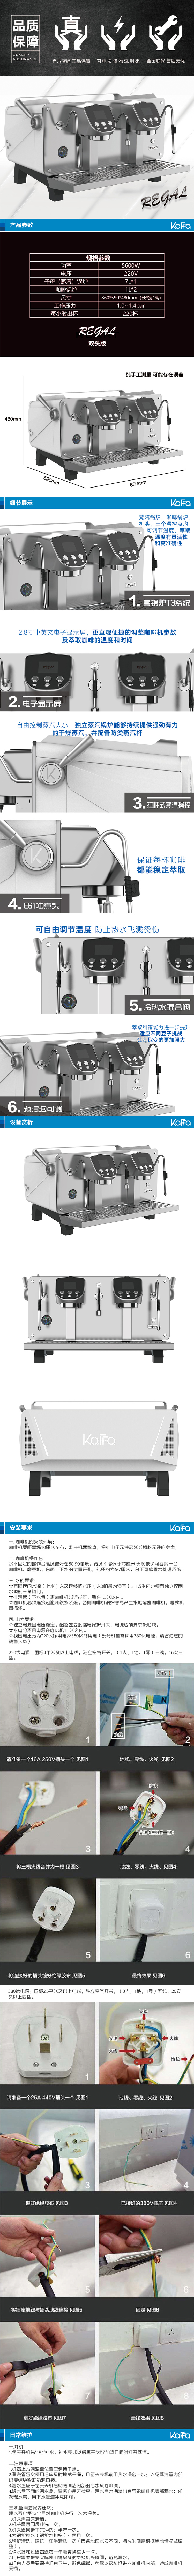 KAFFA REGAL二代半自动双头咖啡机预浸泡PIDE61机头多锅炉T3系统